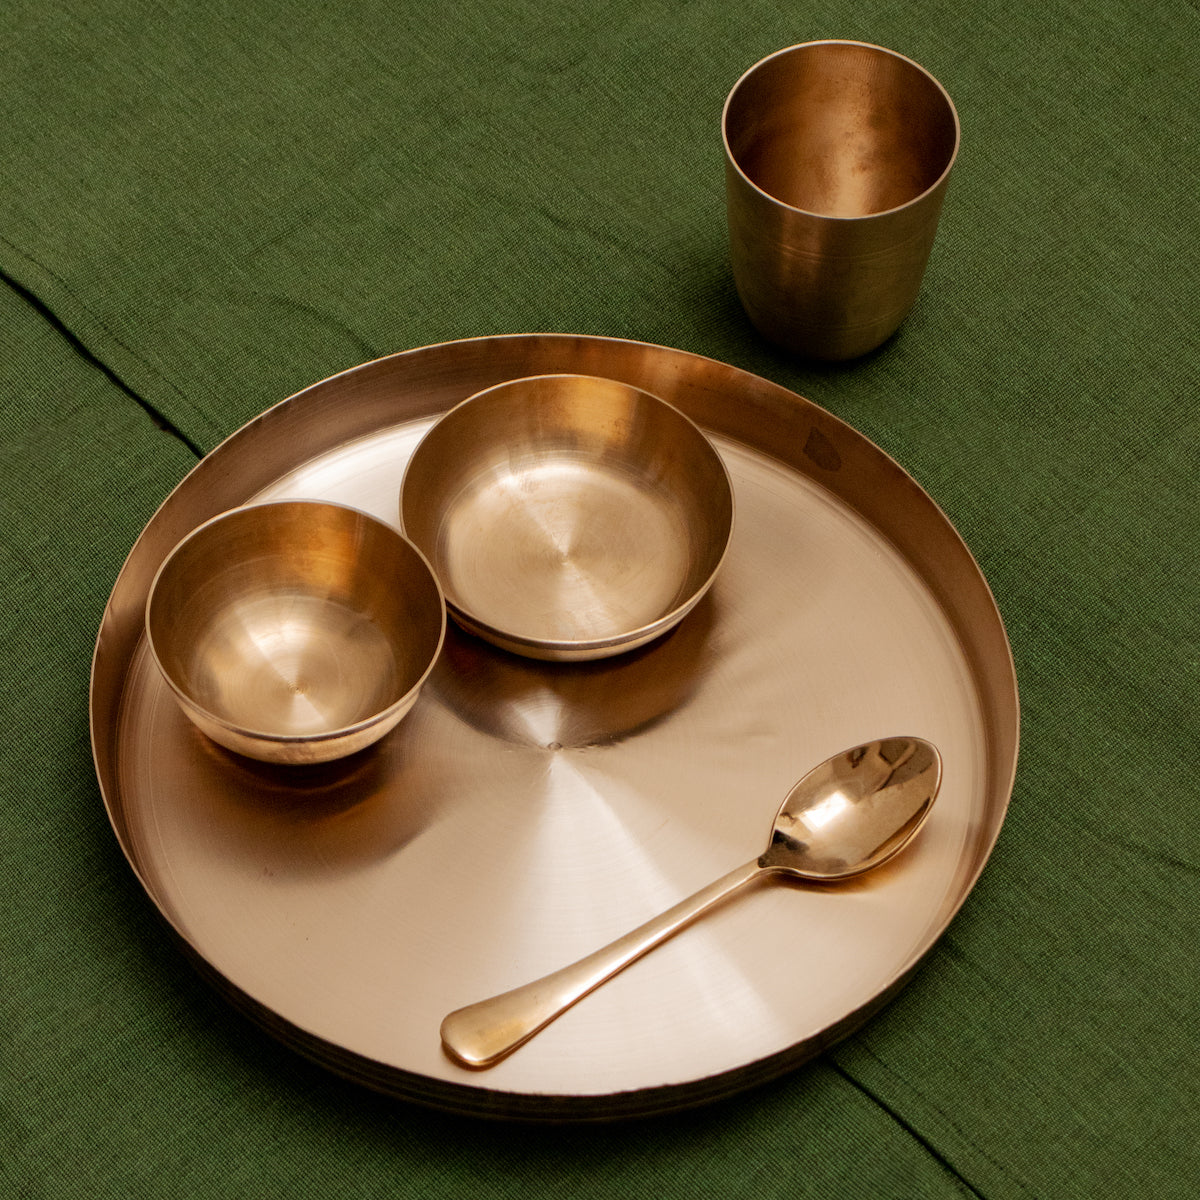 Handmade Traditional Serveware-Bowls & Trays | Buy Online | Zishta